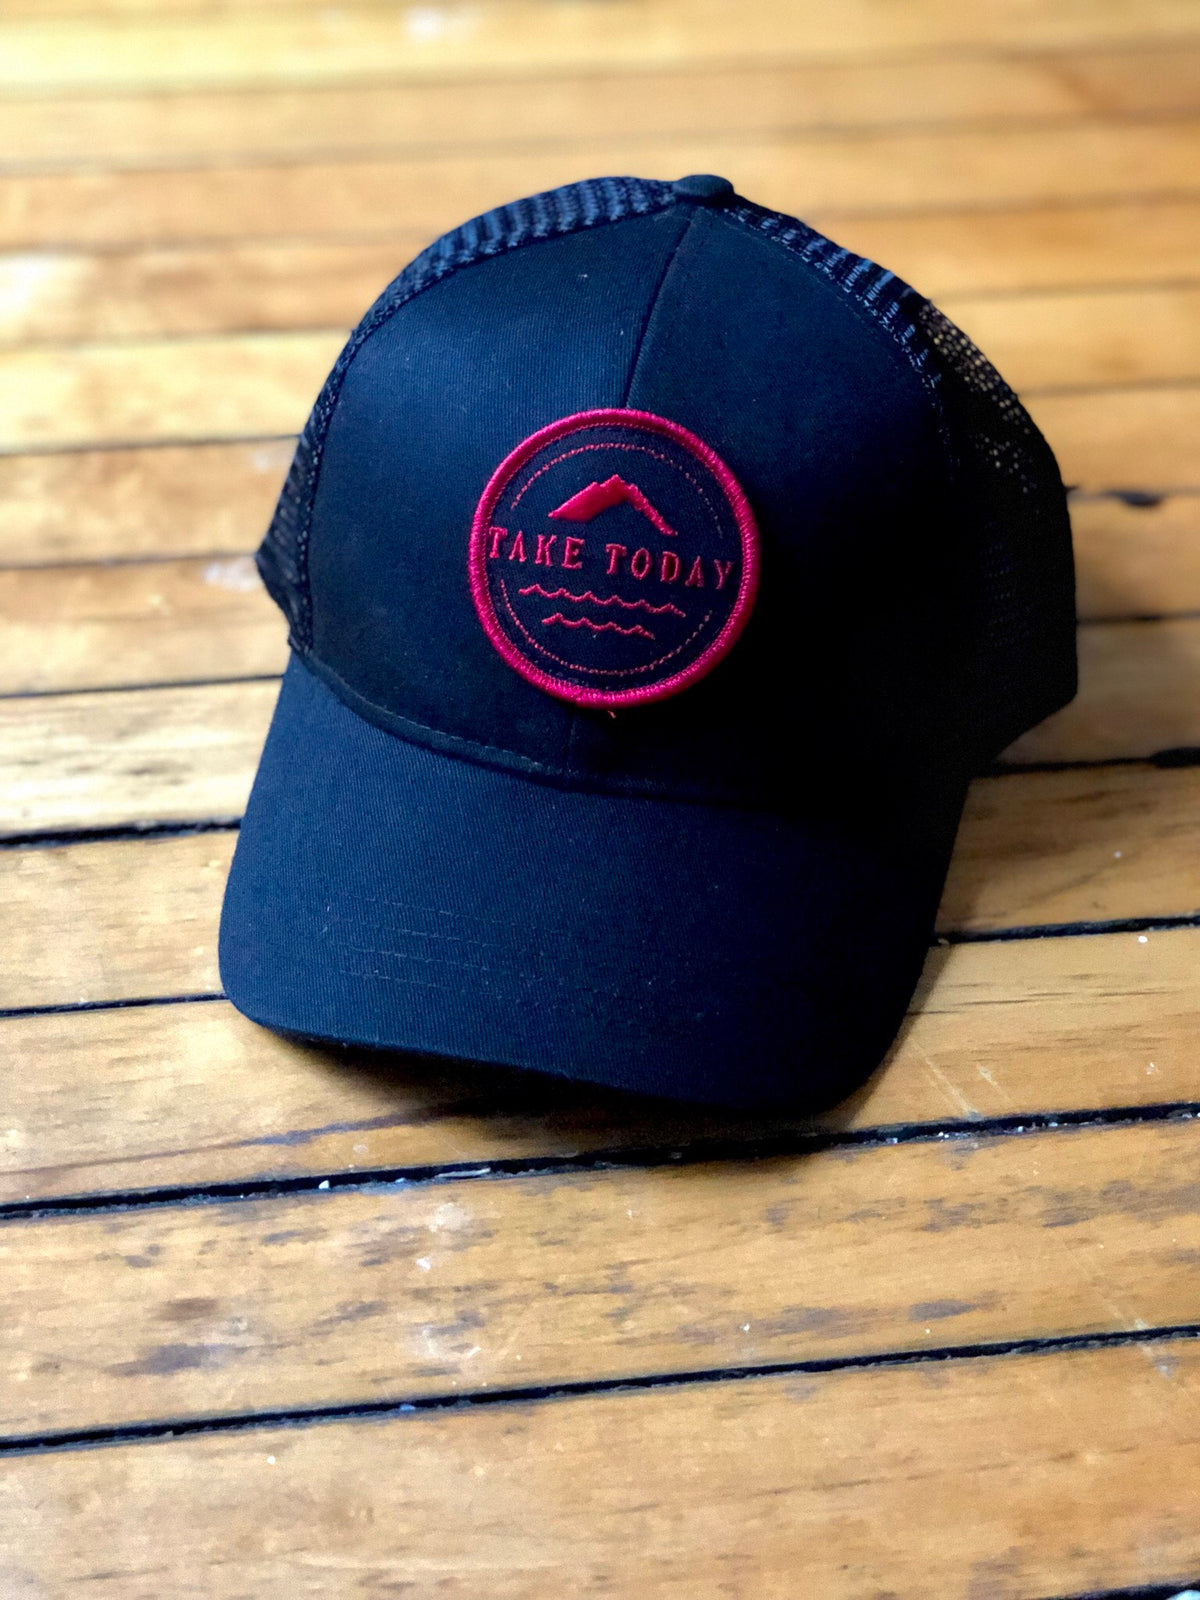 "uptown" trucker hat in ember - Take Today Community